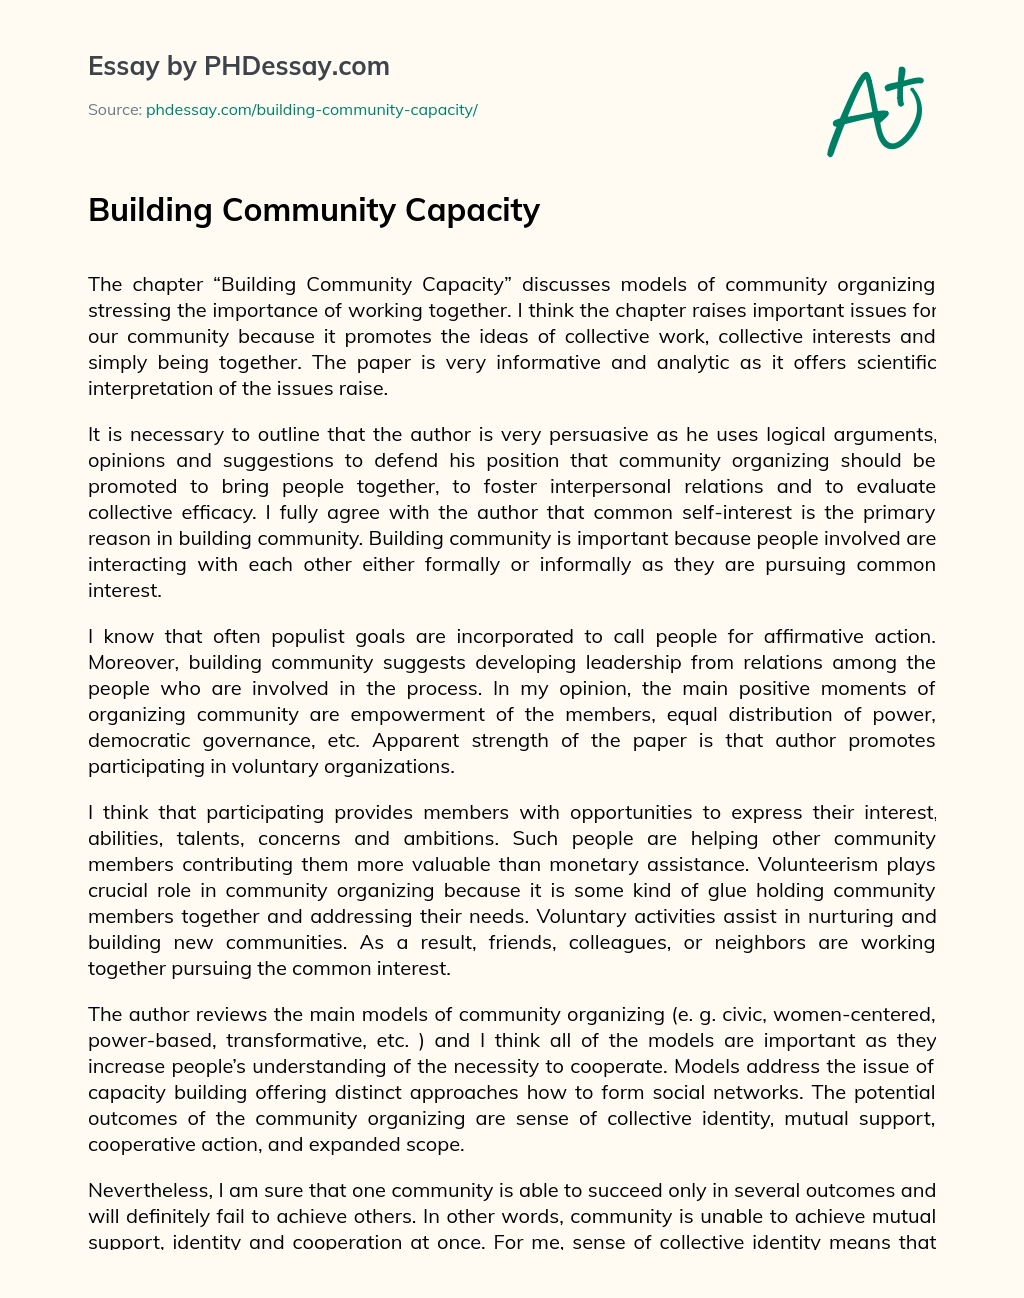 Building Community Capacity essay